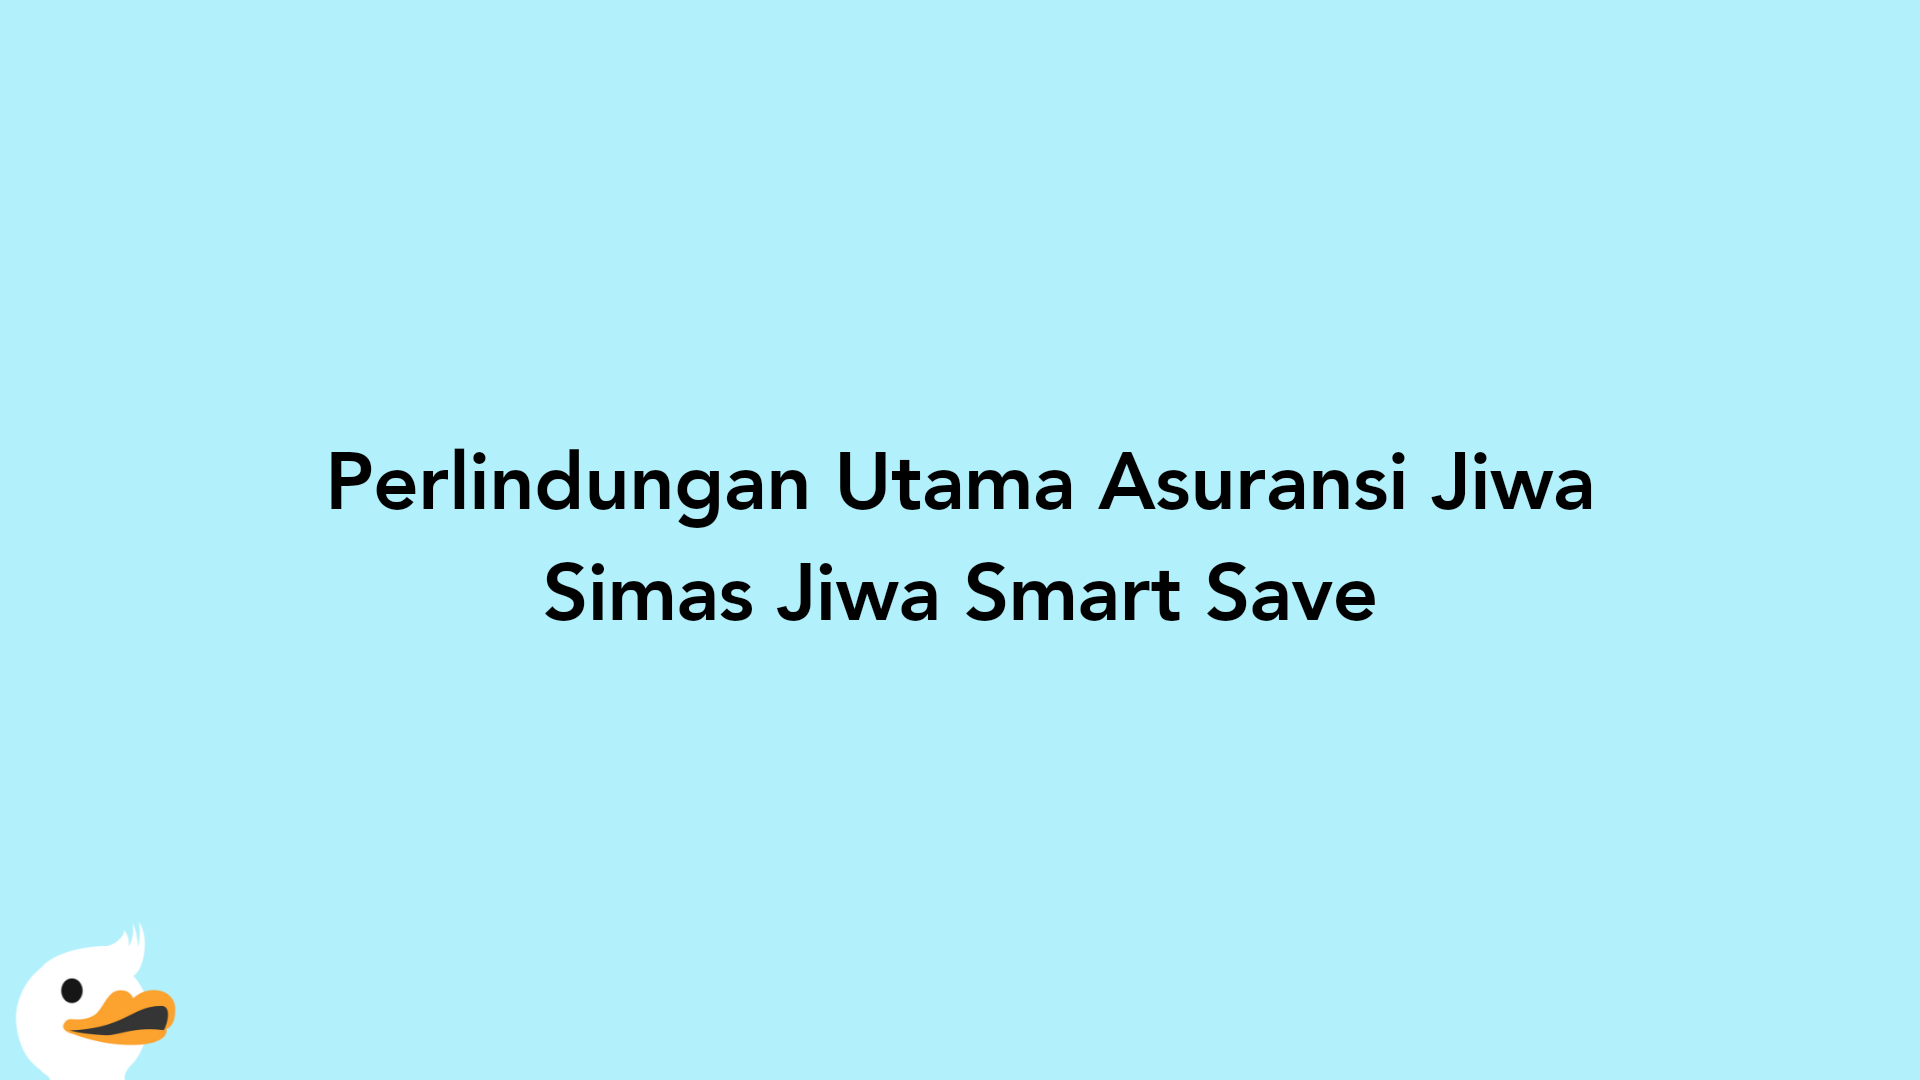 Perlindungan Utama Asuransi Jiwa Simas Jiwa Smart Save